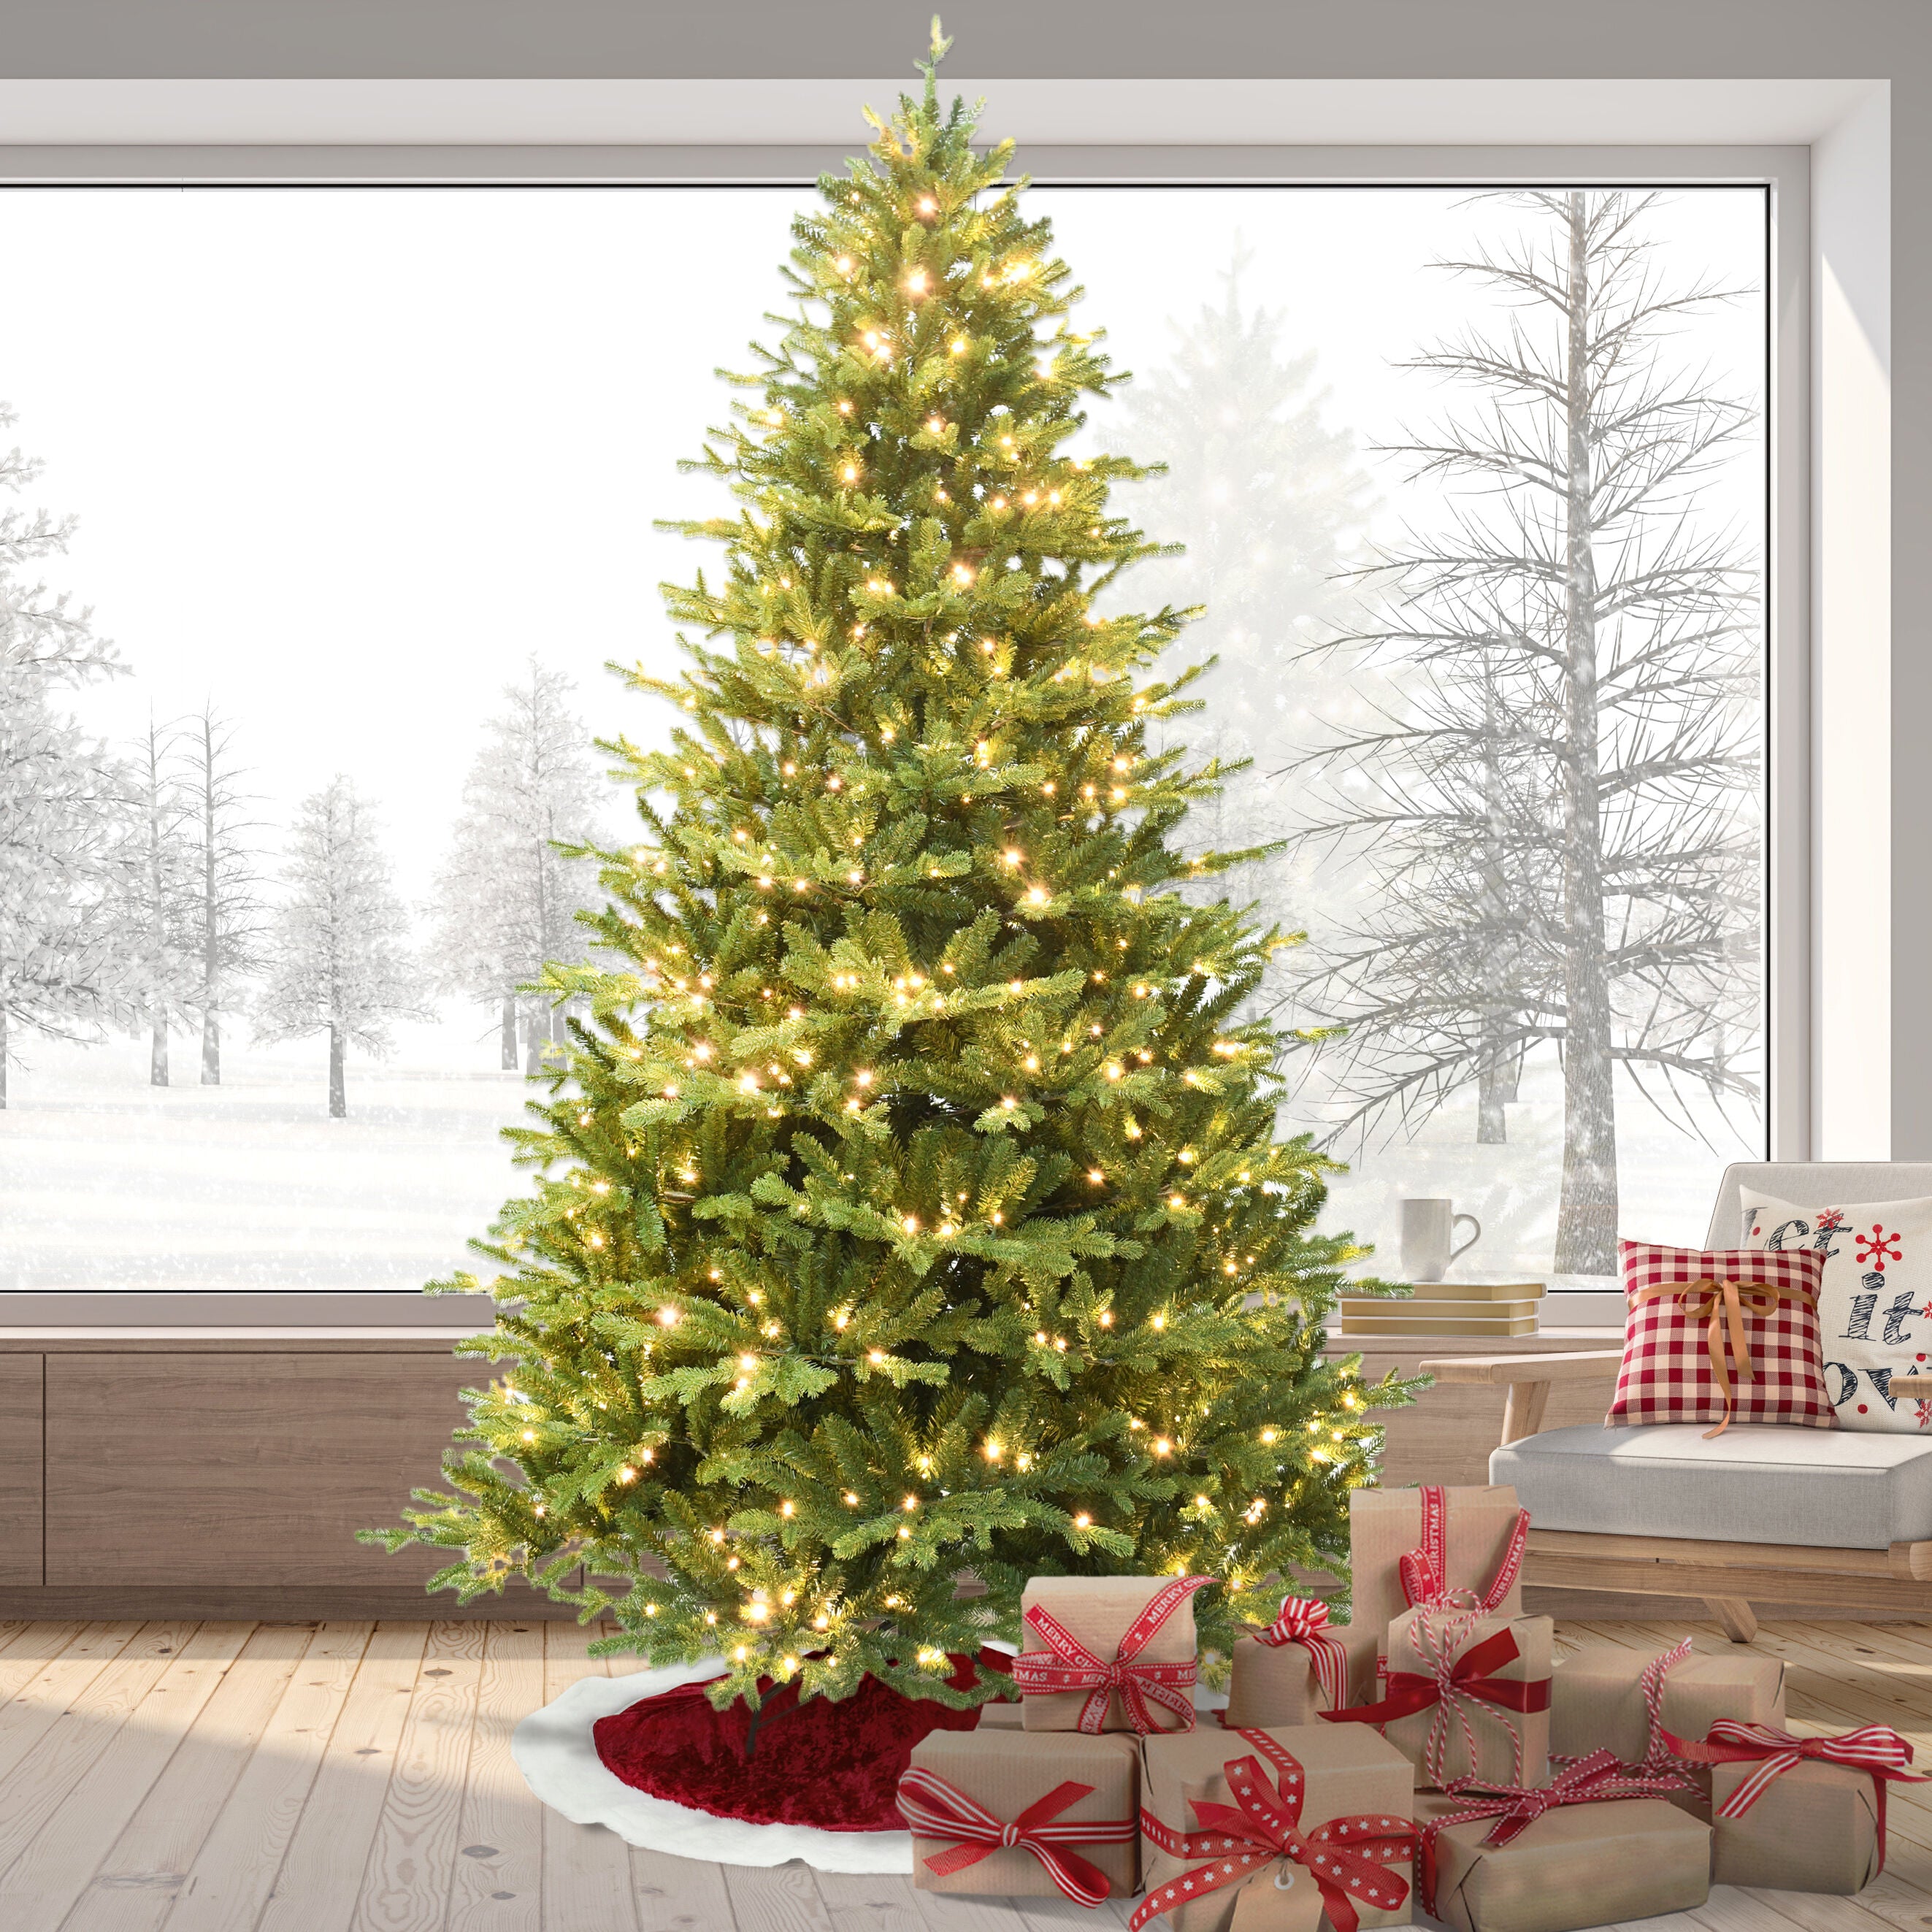 Fraser Hill Farm -  7.5-Ft. Oregon Pine Christmas Tree with Warm White LED Lighting